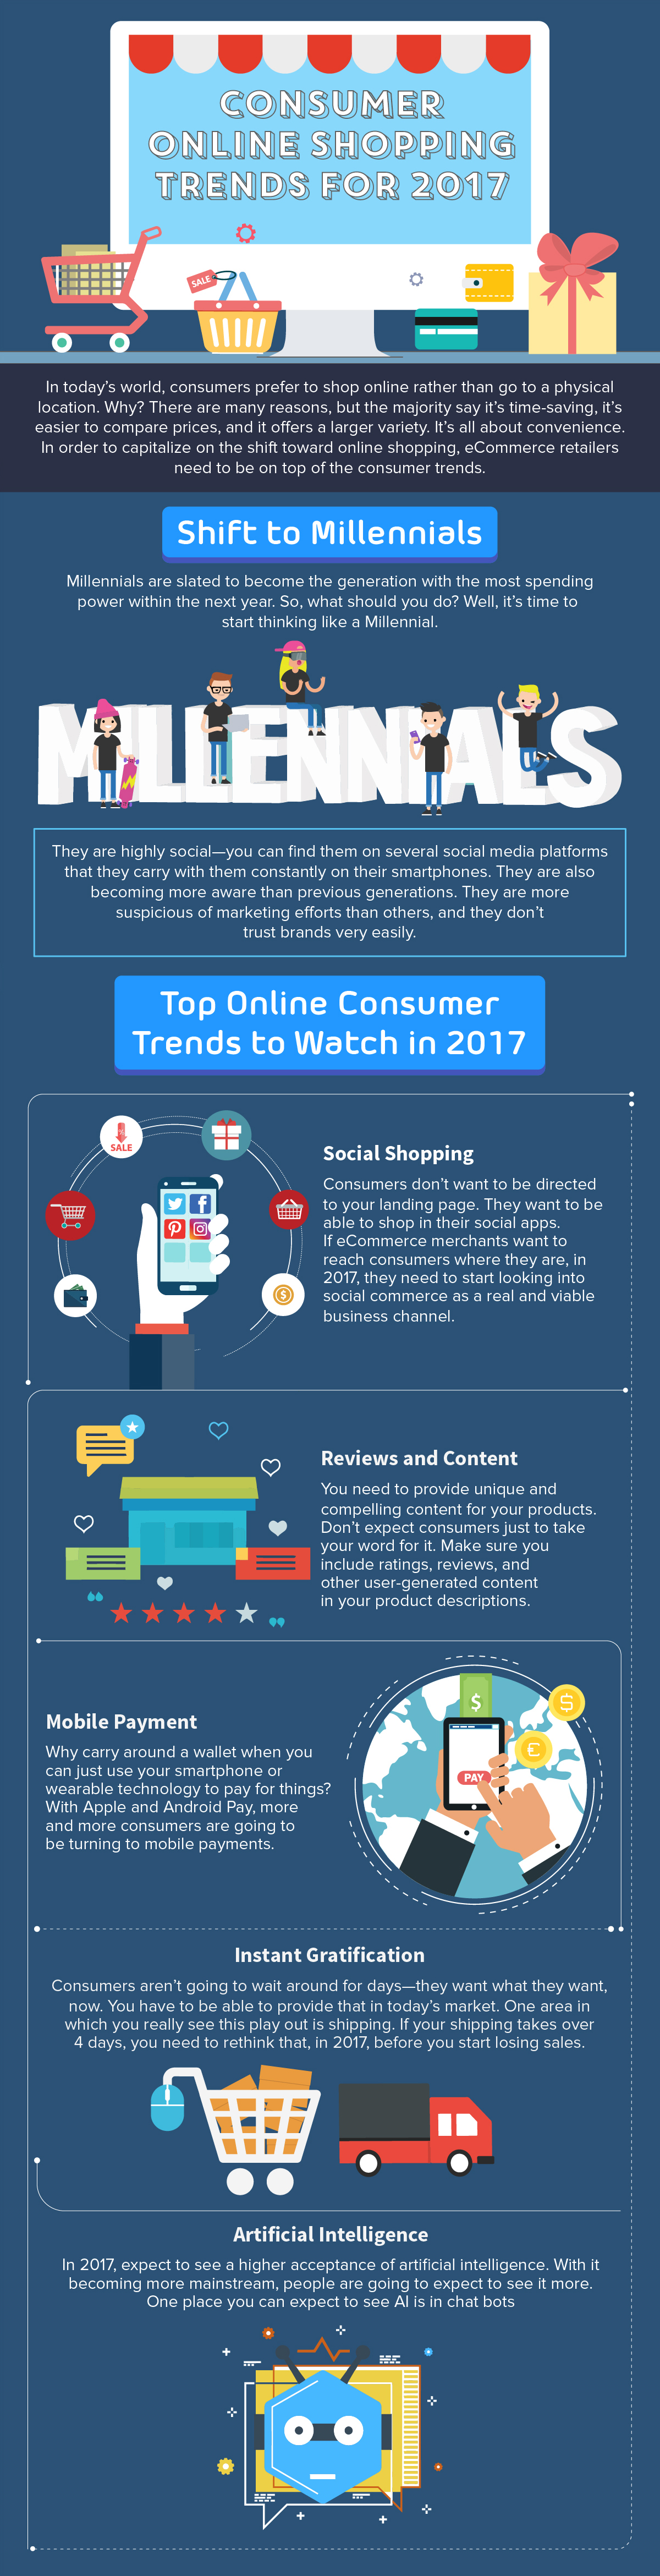 Consumer Online Shopping Trends for 2017